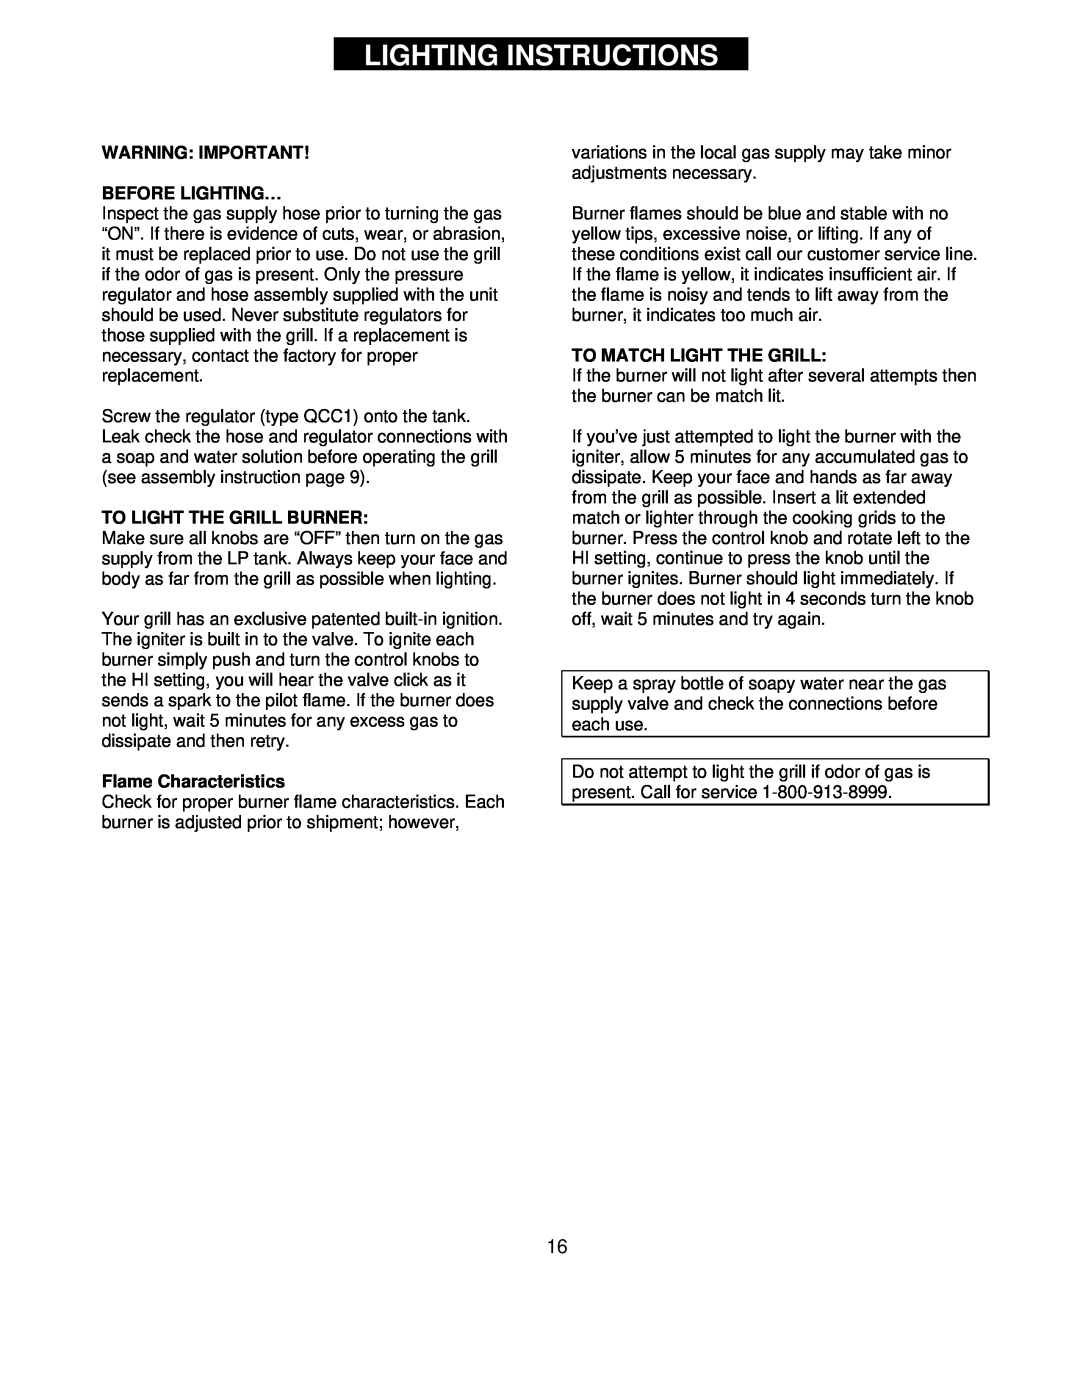 Nexgrill 720-0125-LP manual Lighting Instructions, Warning Important Before Lighting…, To Light The Grill Burner 